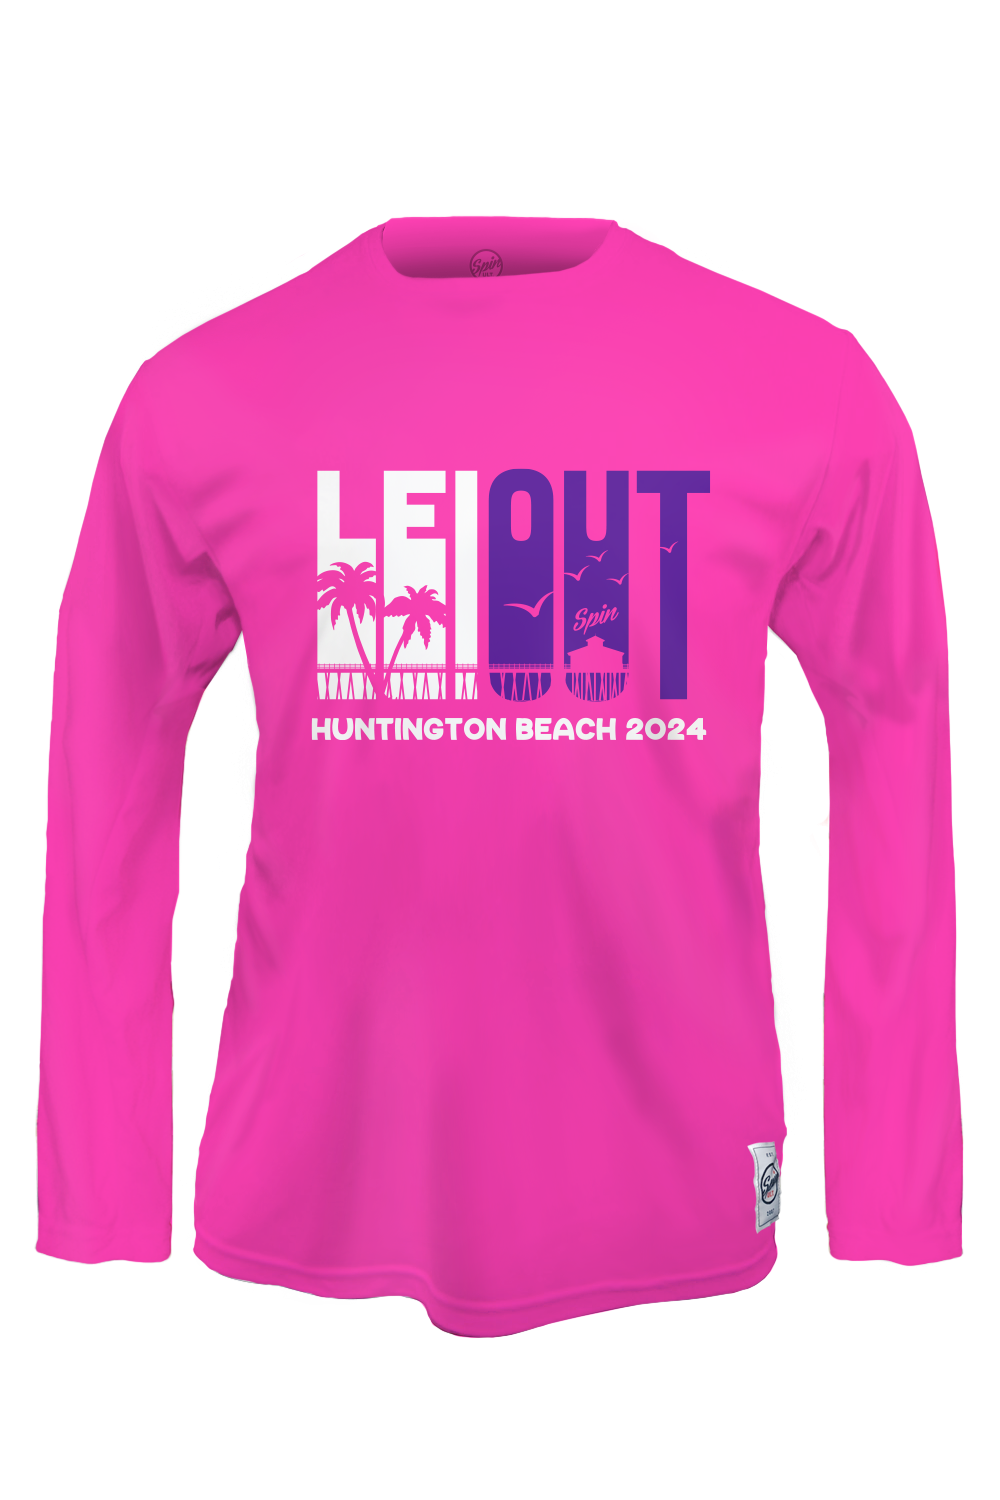 LeiOut 2024 Pier Long Sleeve Jersey (Neon Pink)